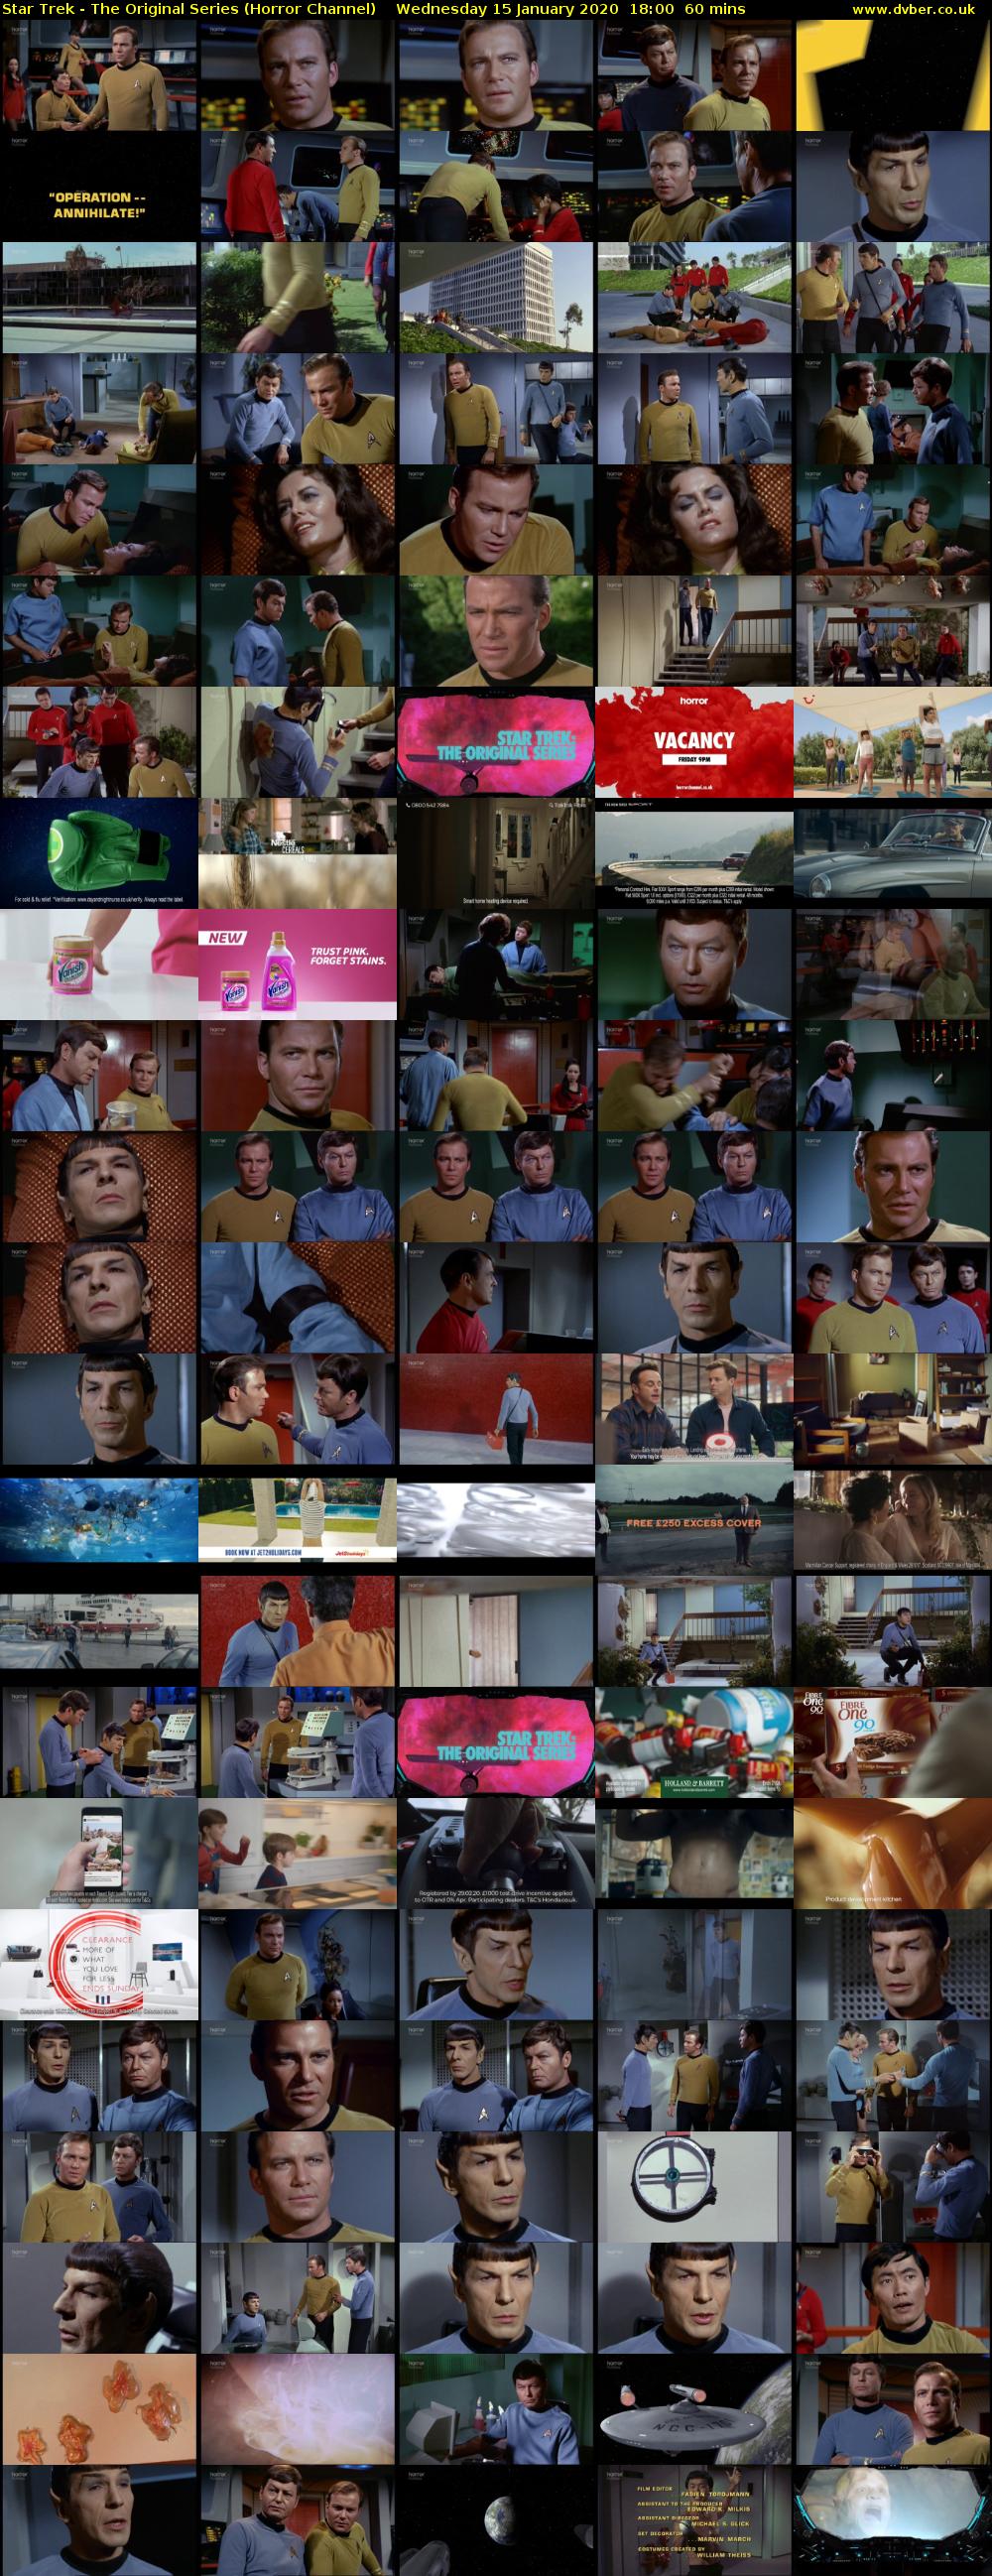 Star Trek - The Original Series (Horror Channel) Wednesday 15 January 2020 18:00 - 19:00